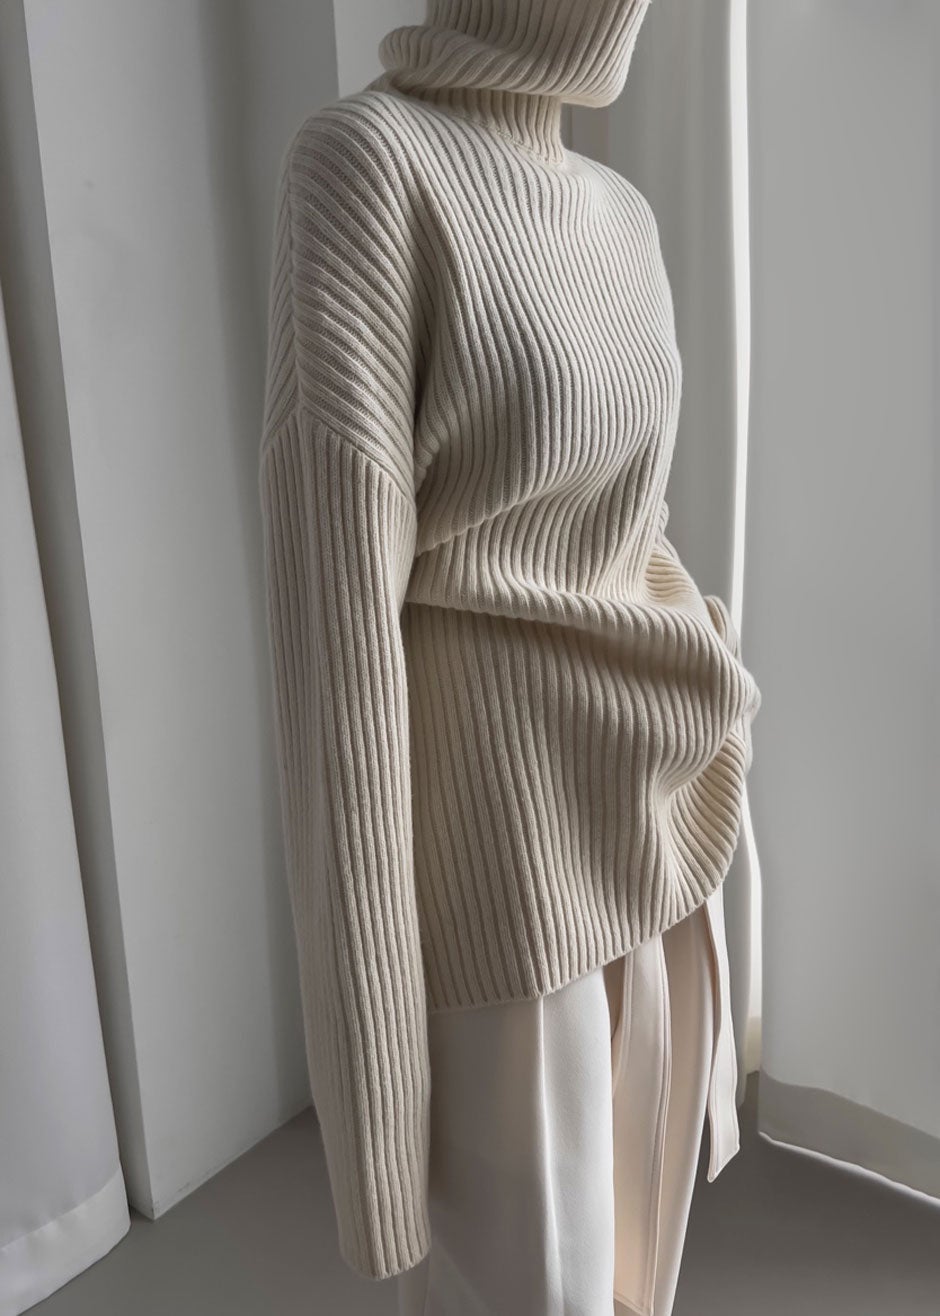 Thelma Ribbed Sweater - Cream